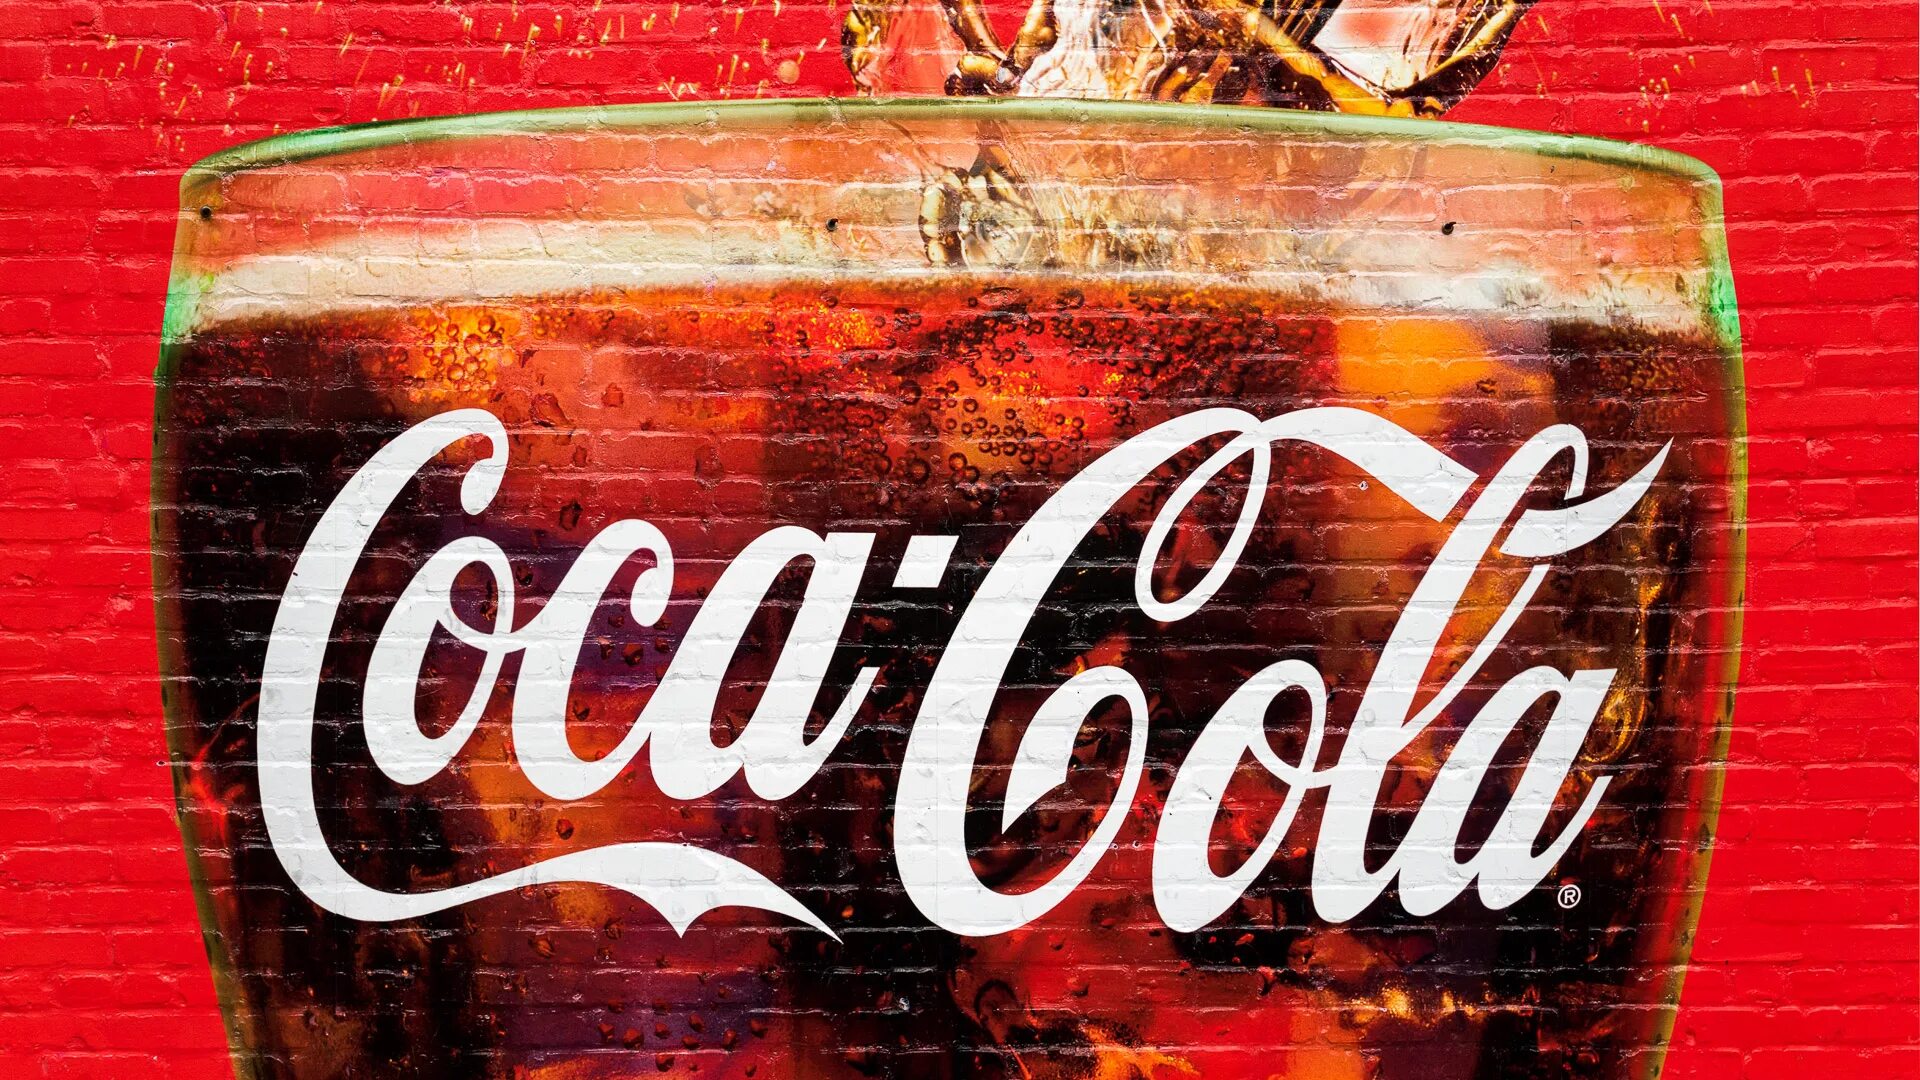 Кока кола беларусь. Кола реклама. Кока кола реклама. Coca Cola реклама. День рождения напитка «Кока-кола».